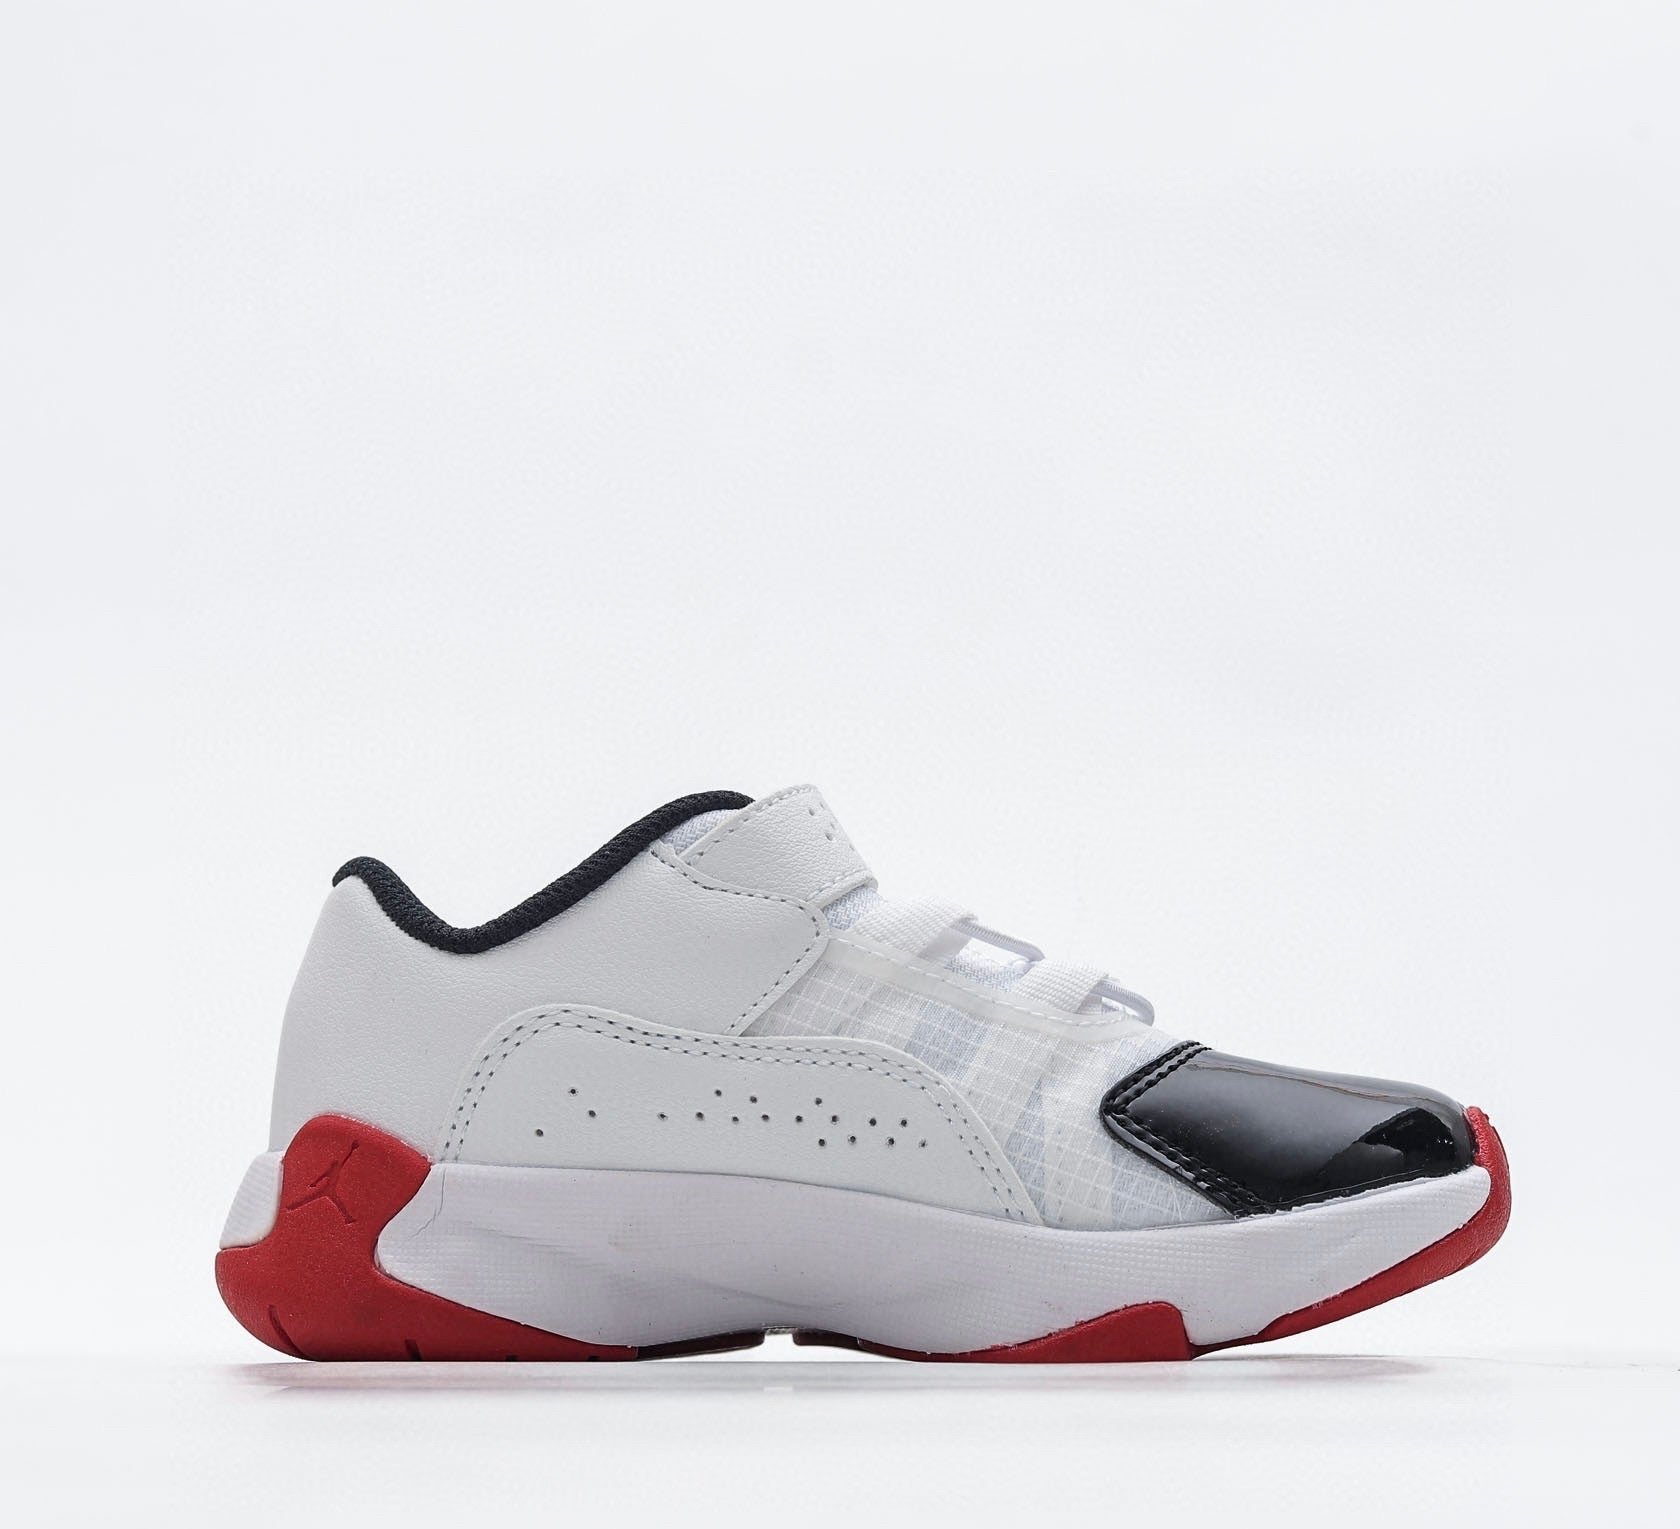 Nike air jordan retro low cut black/white/red shoes